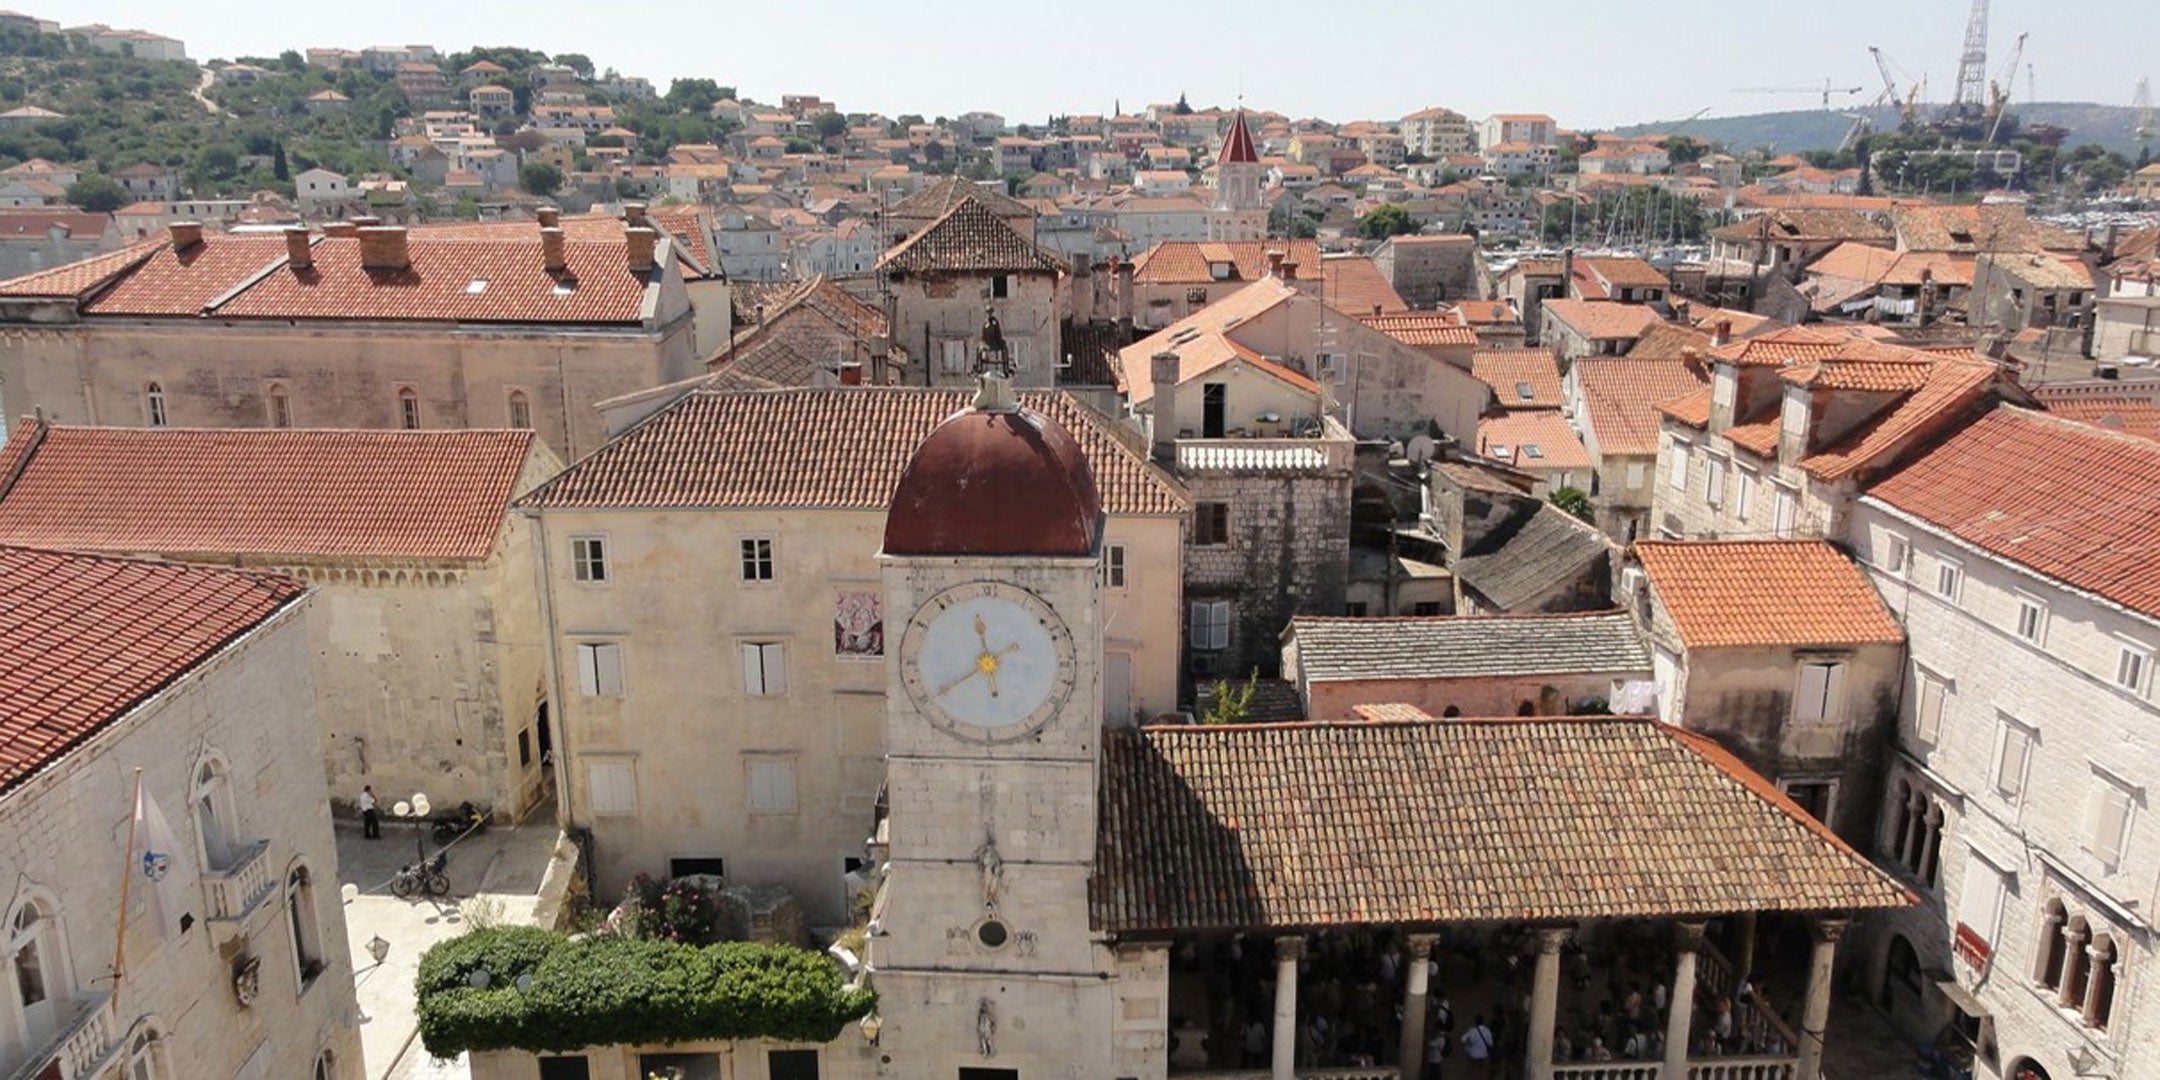 Trogir is a town rich in history in Dalmatia